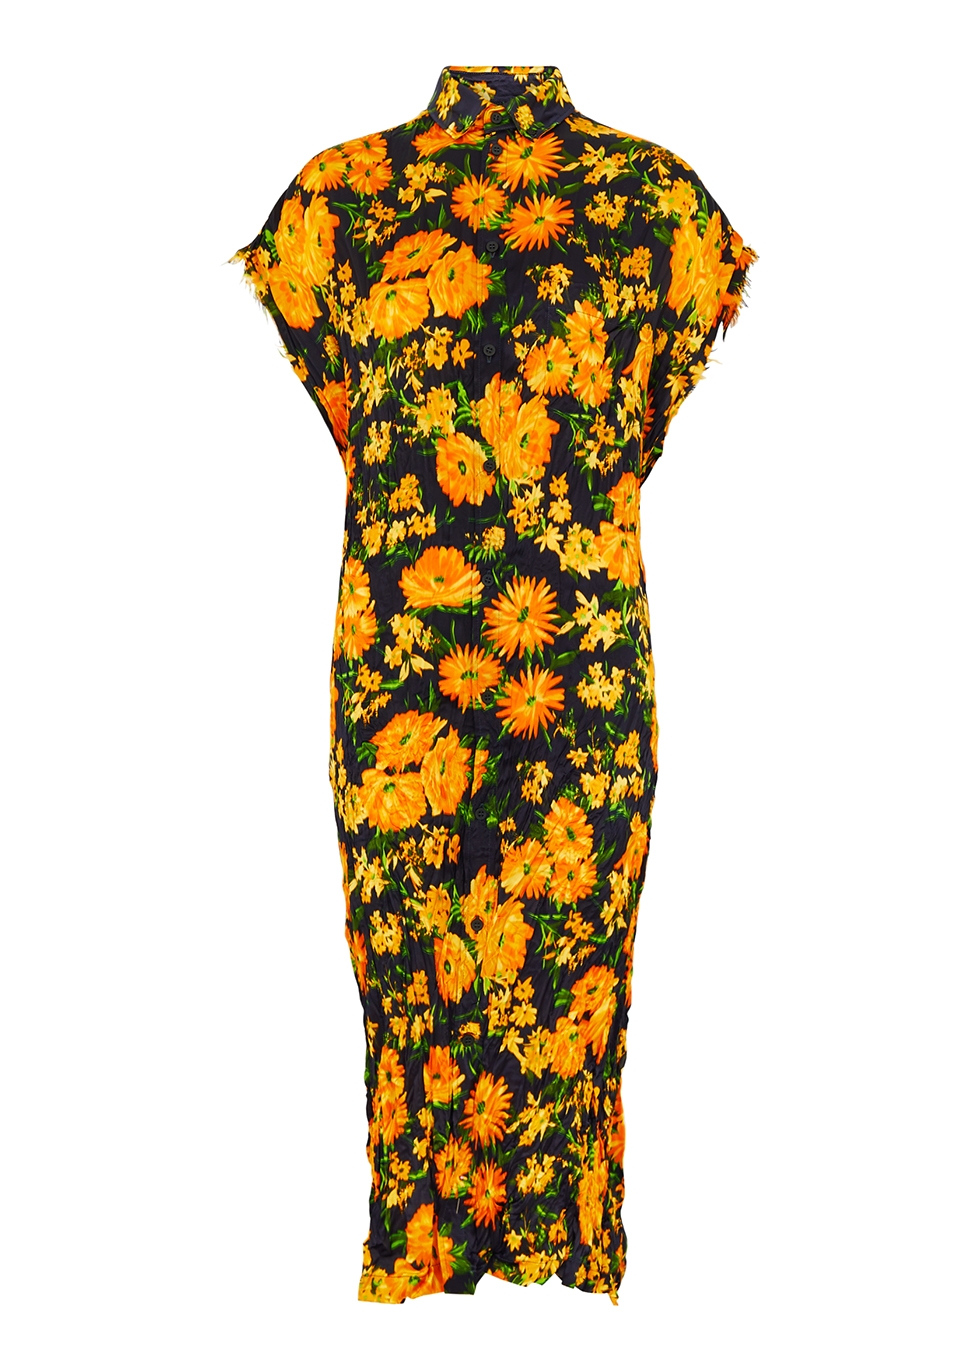 Balenciaga Flower Wrinkled Dress size 36  eBay